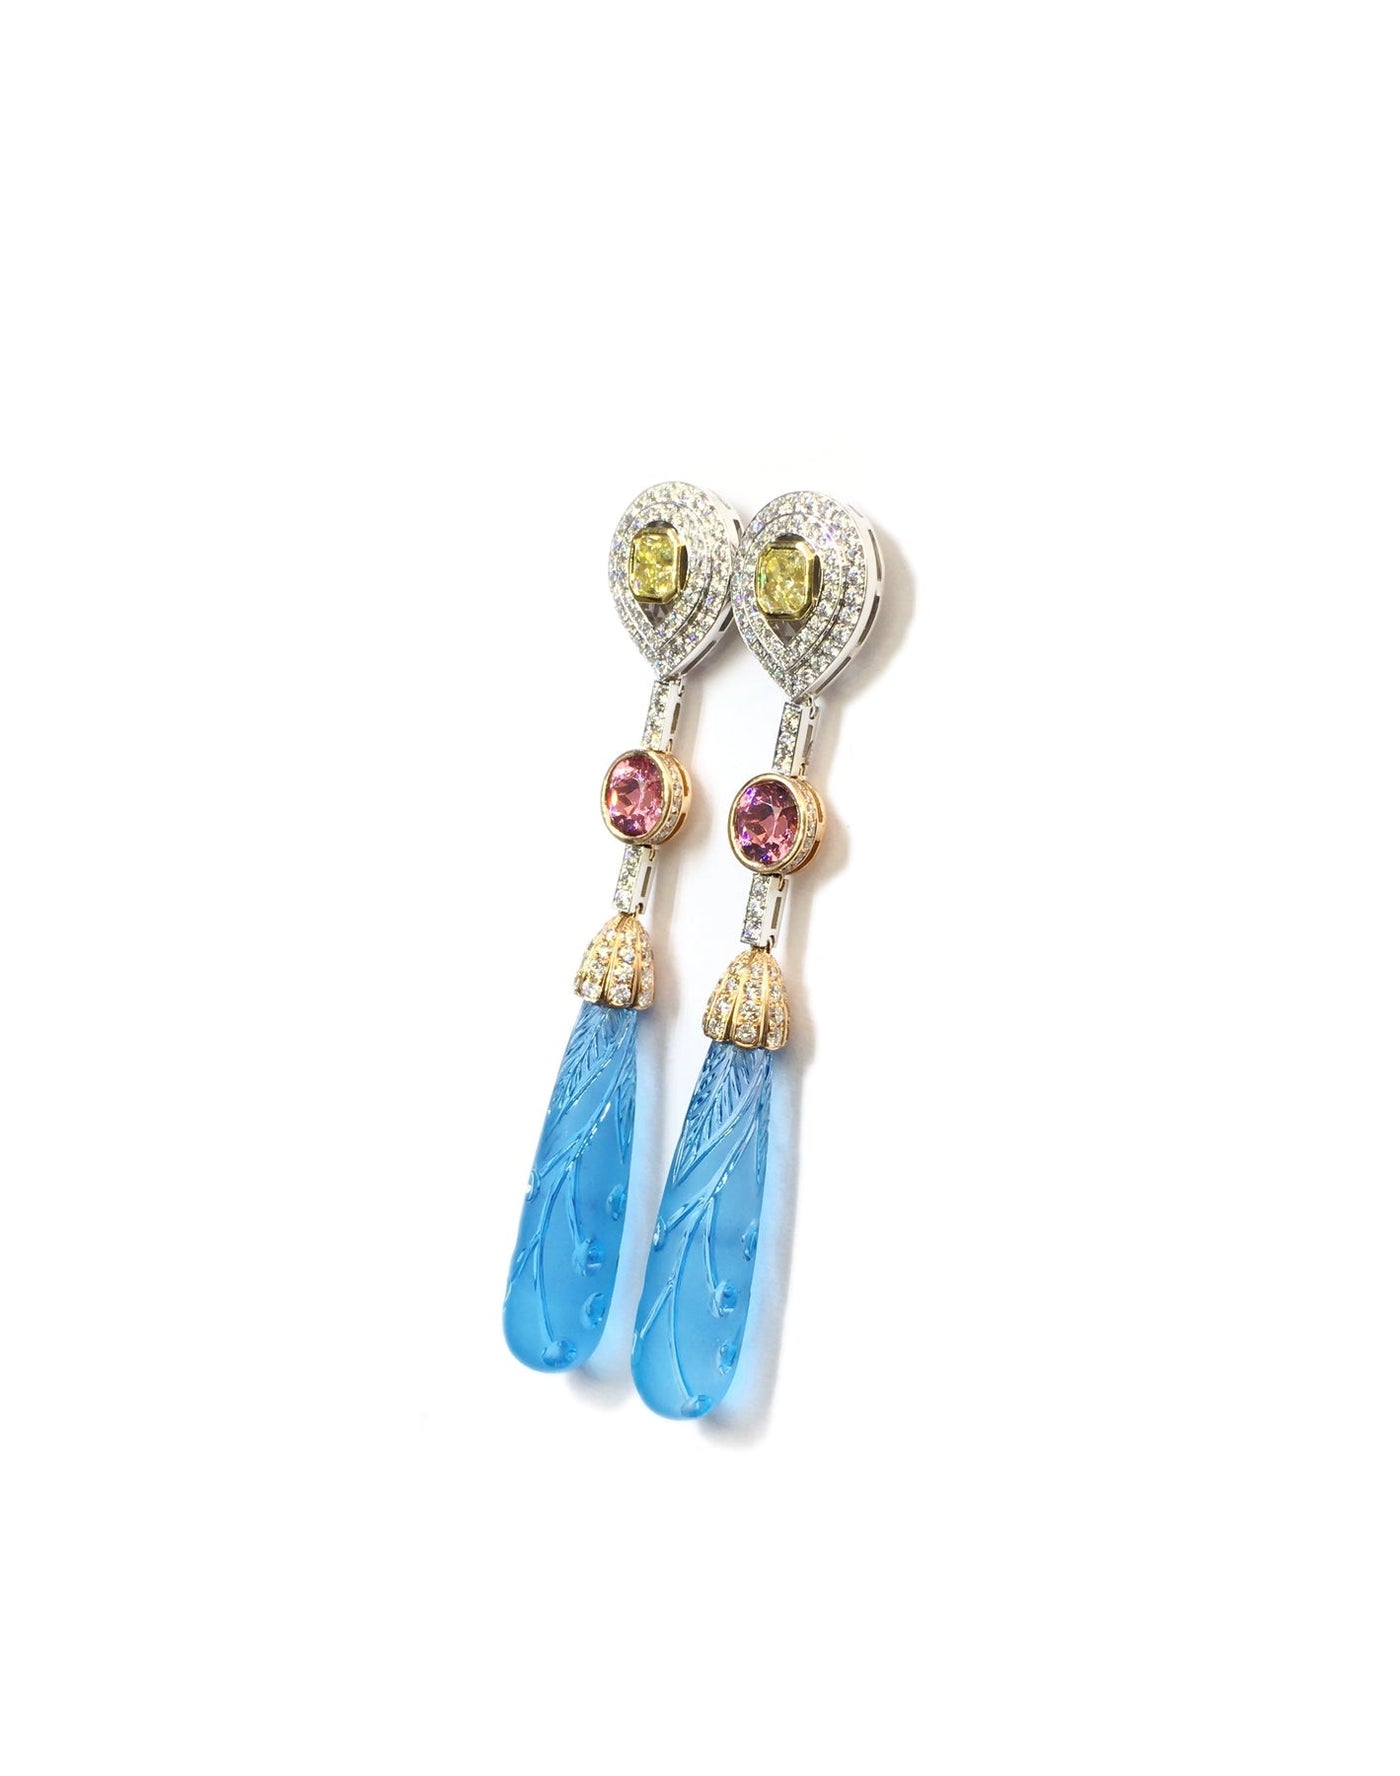 Multicolor gem-stone earrings "The garden" - Surround Art & Diamonds Jewelry by Surround Art & Diamonds